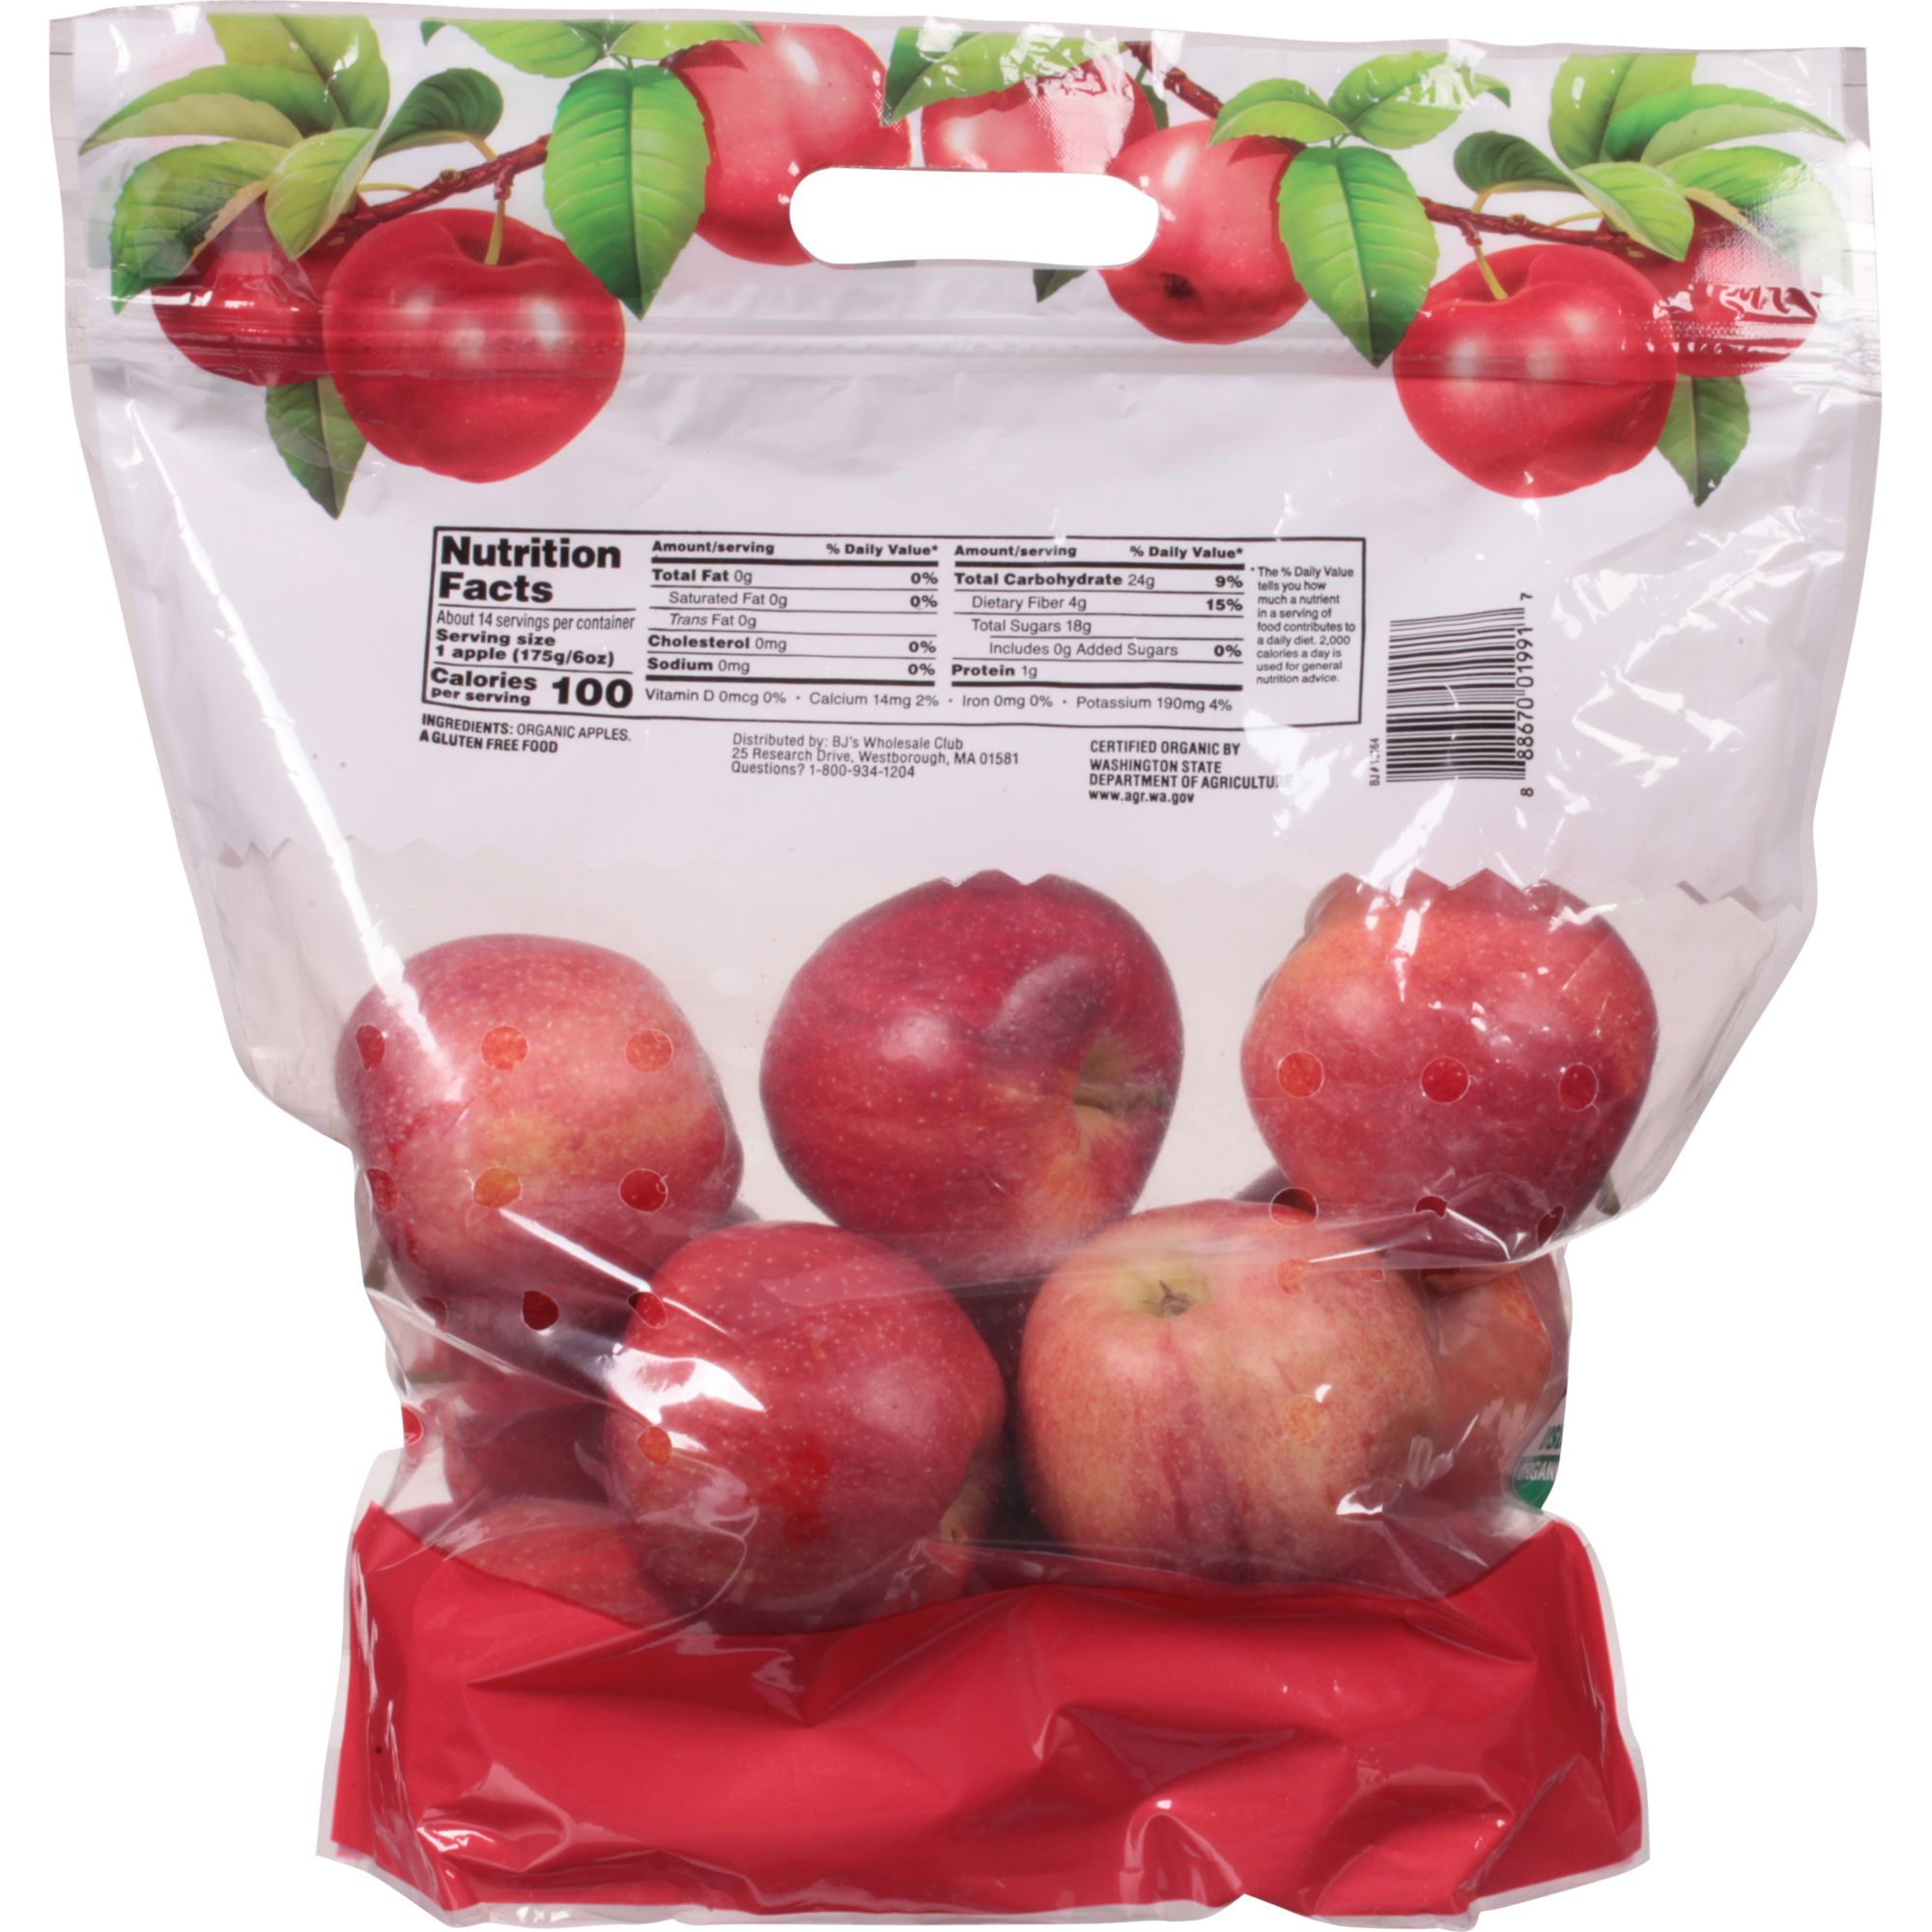 Organic Gala Apple 3lb Bag at Whole Foods Market